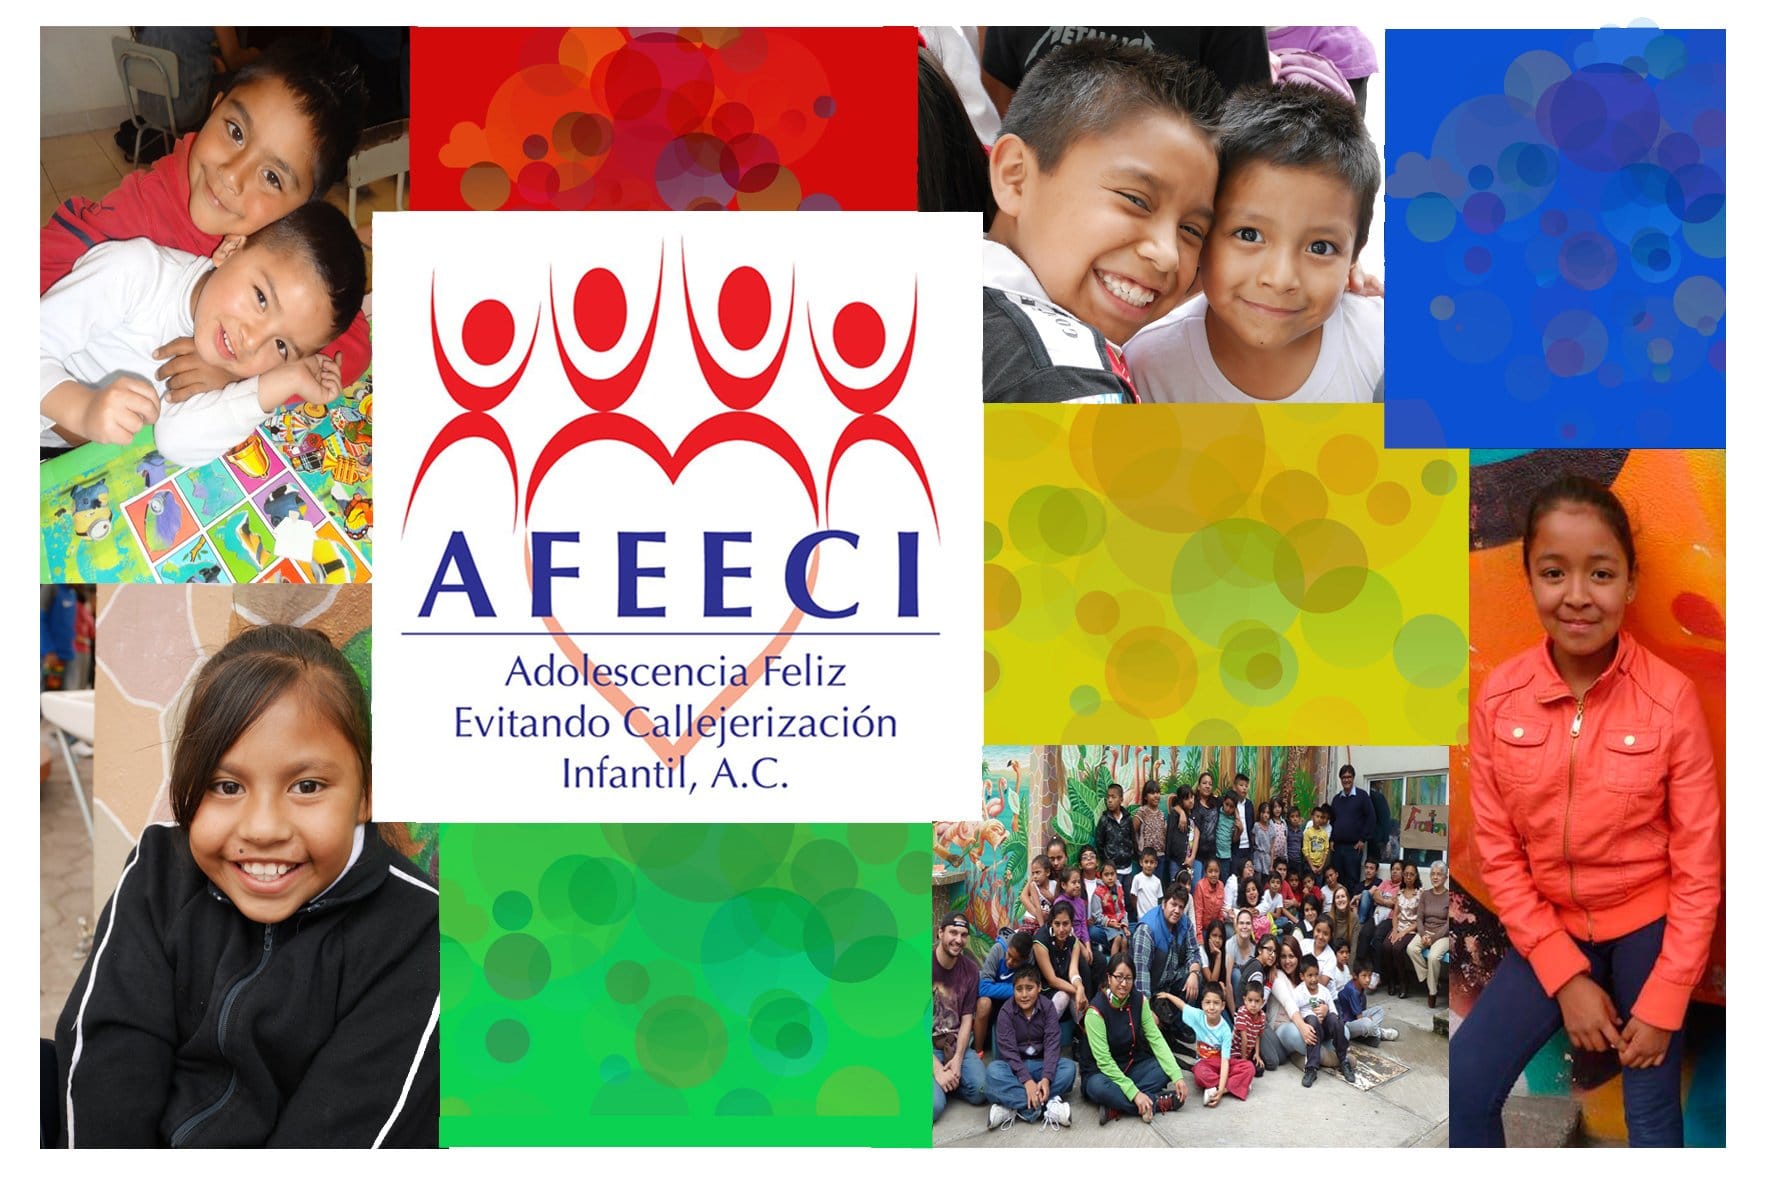 Organización de inspiración católica contra la callejerización infantil en México